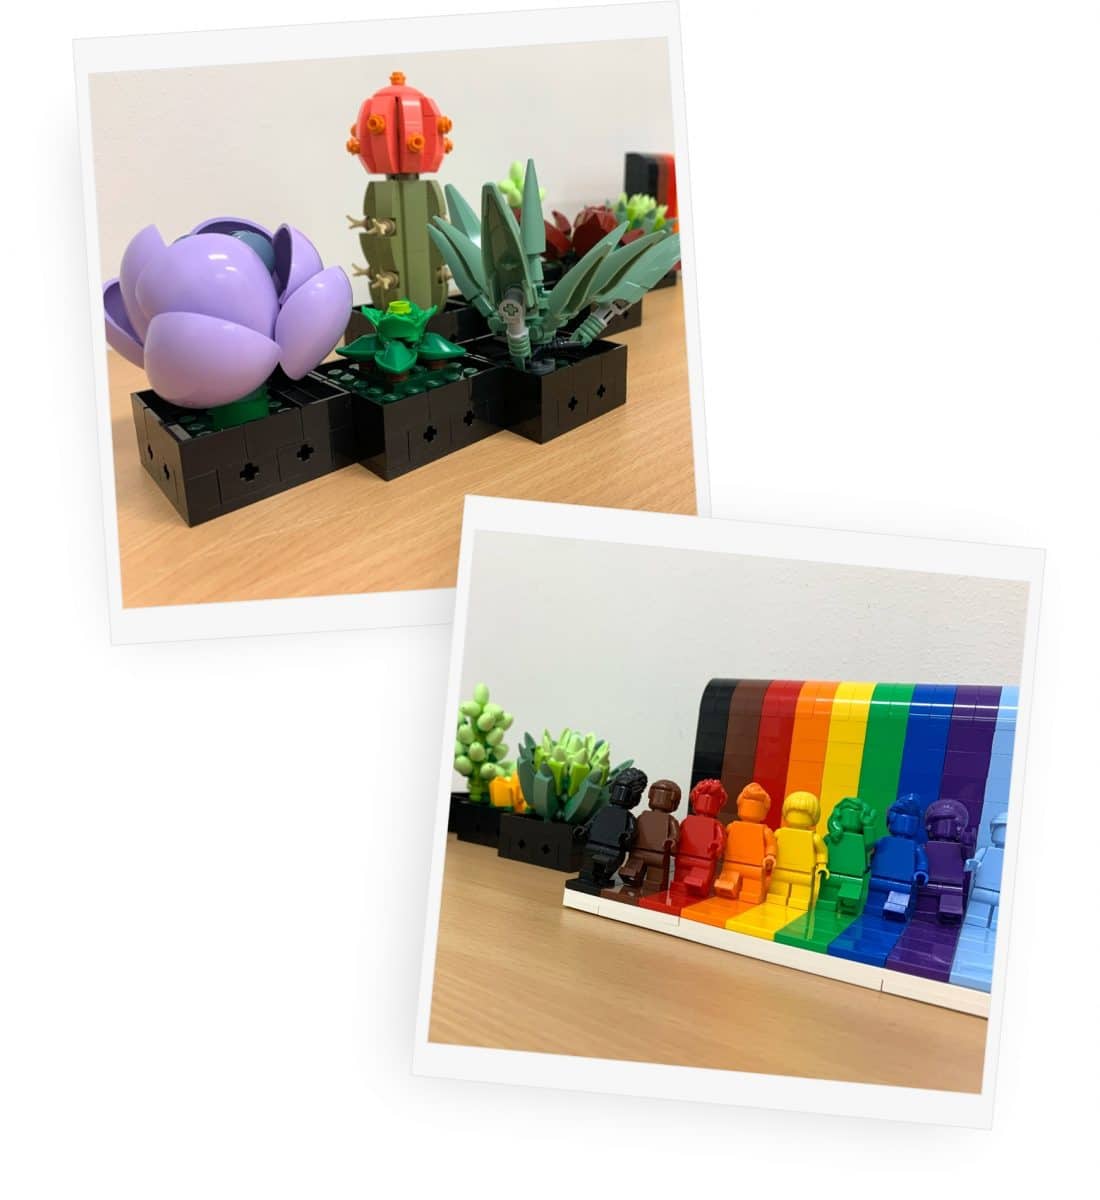 Colourful lego display on desk